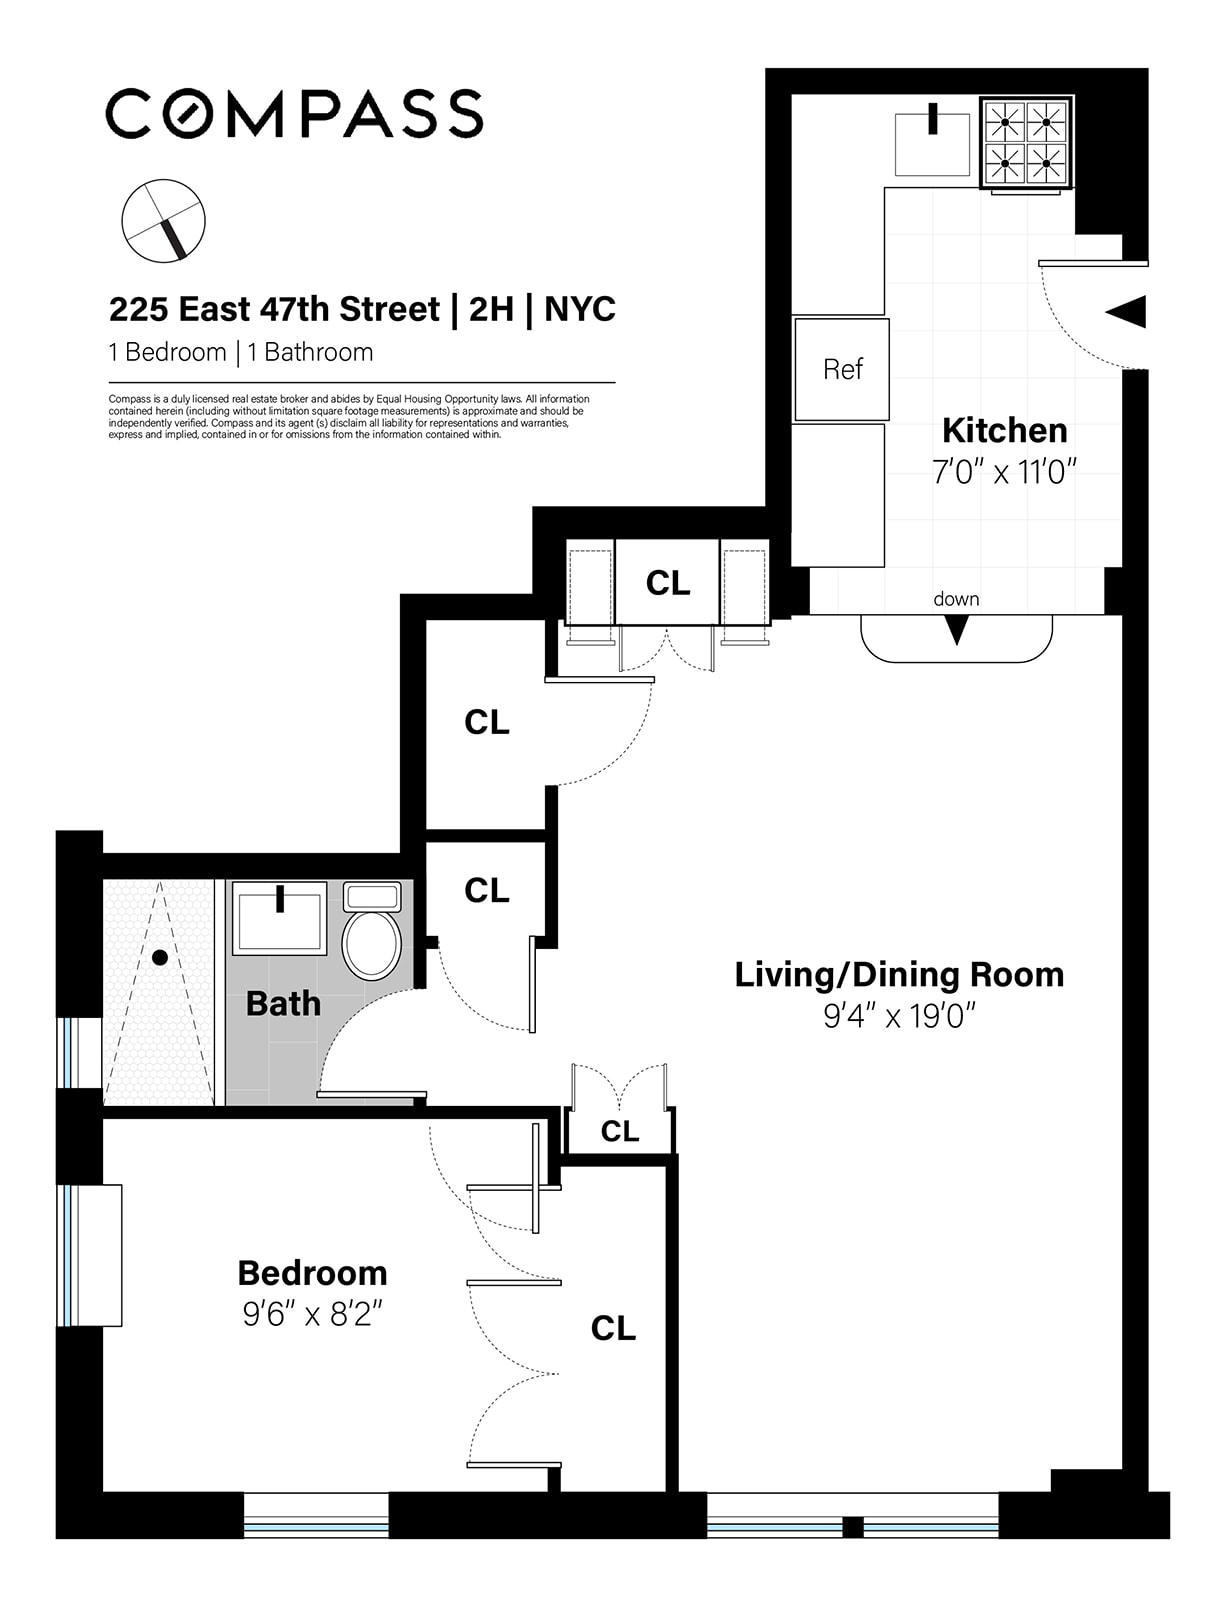 Floorplan for 225 East 47th Street, 2H